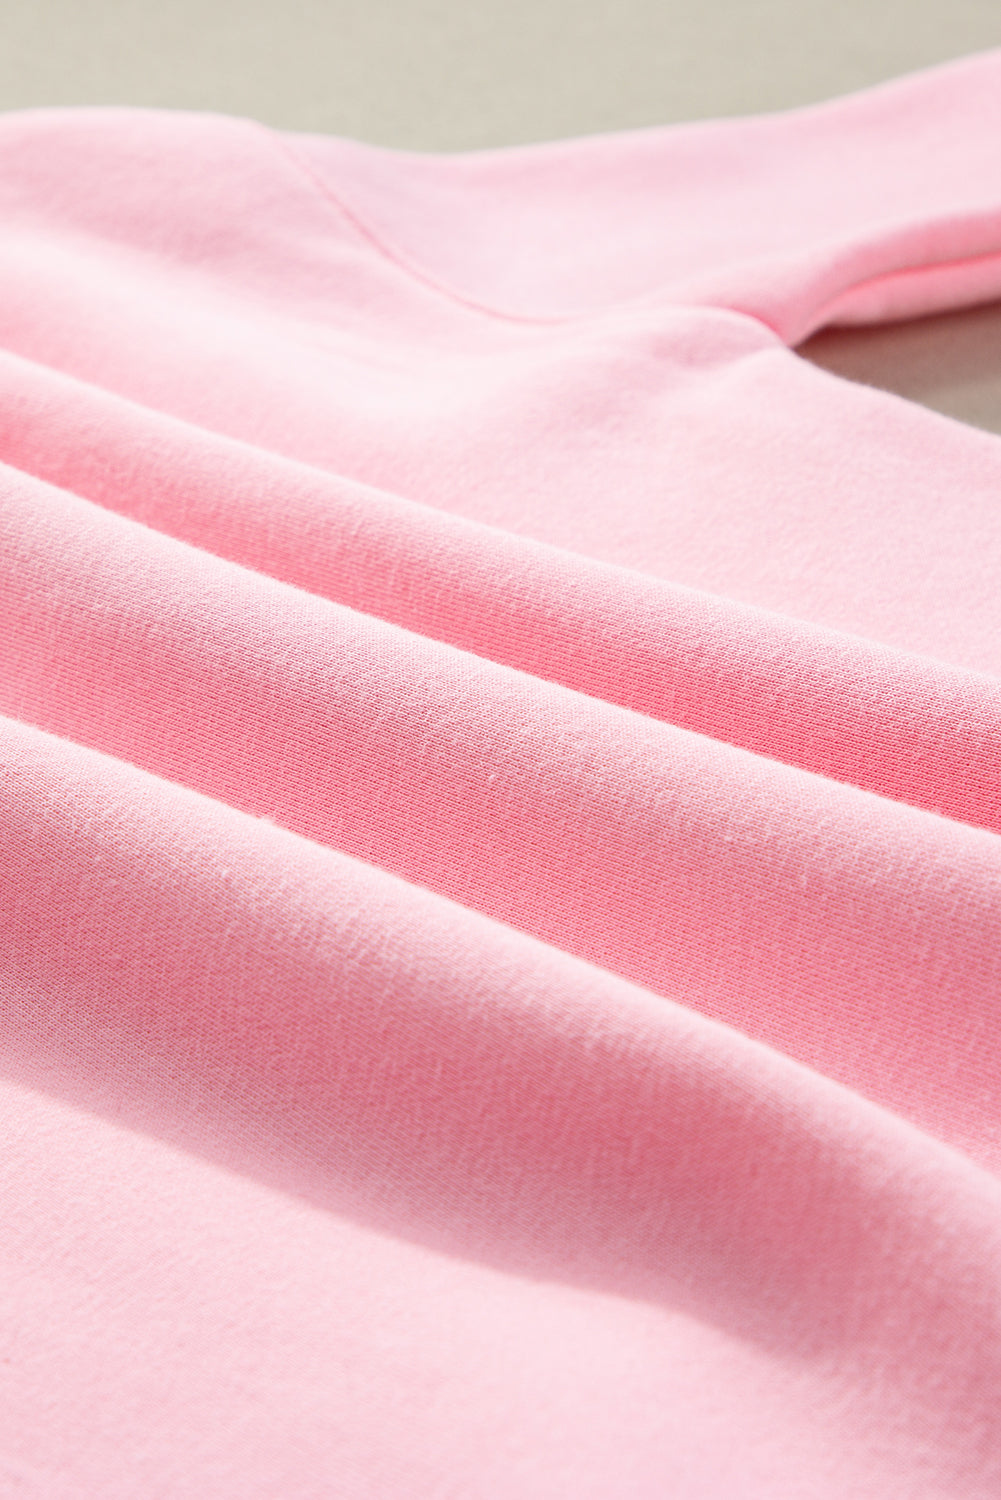 Pink LOVER Puff Print Drop Shoulder Pullover Sweatshirt